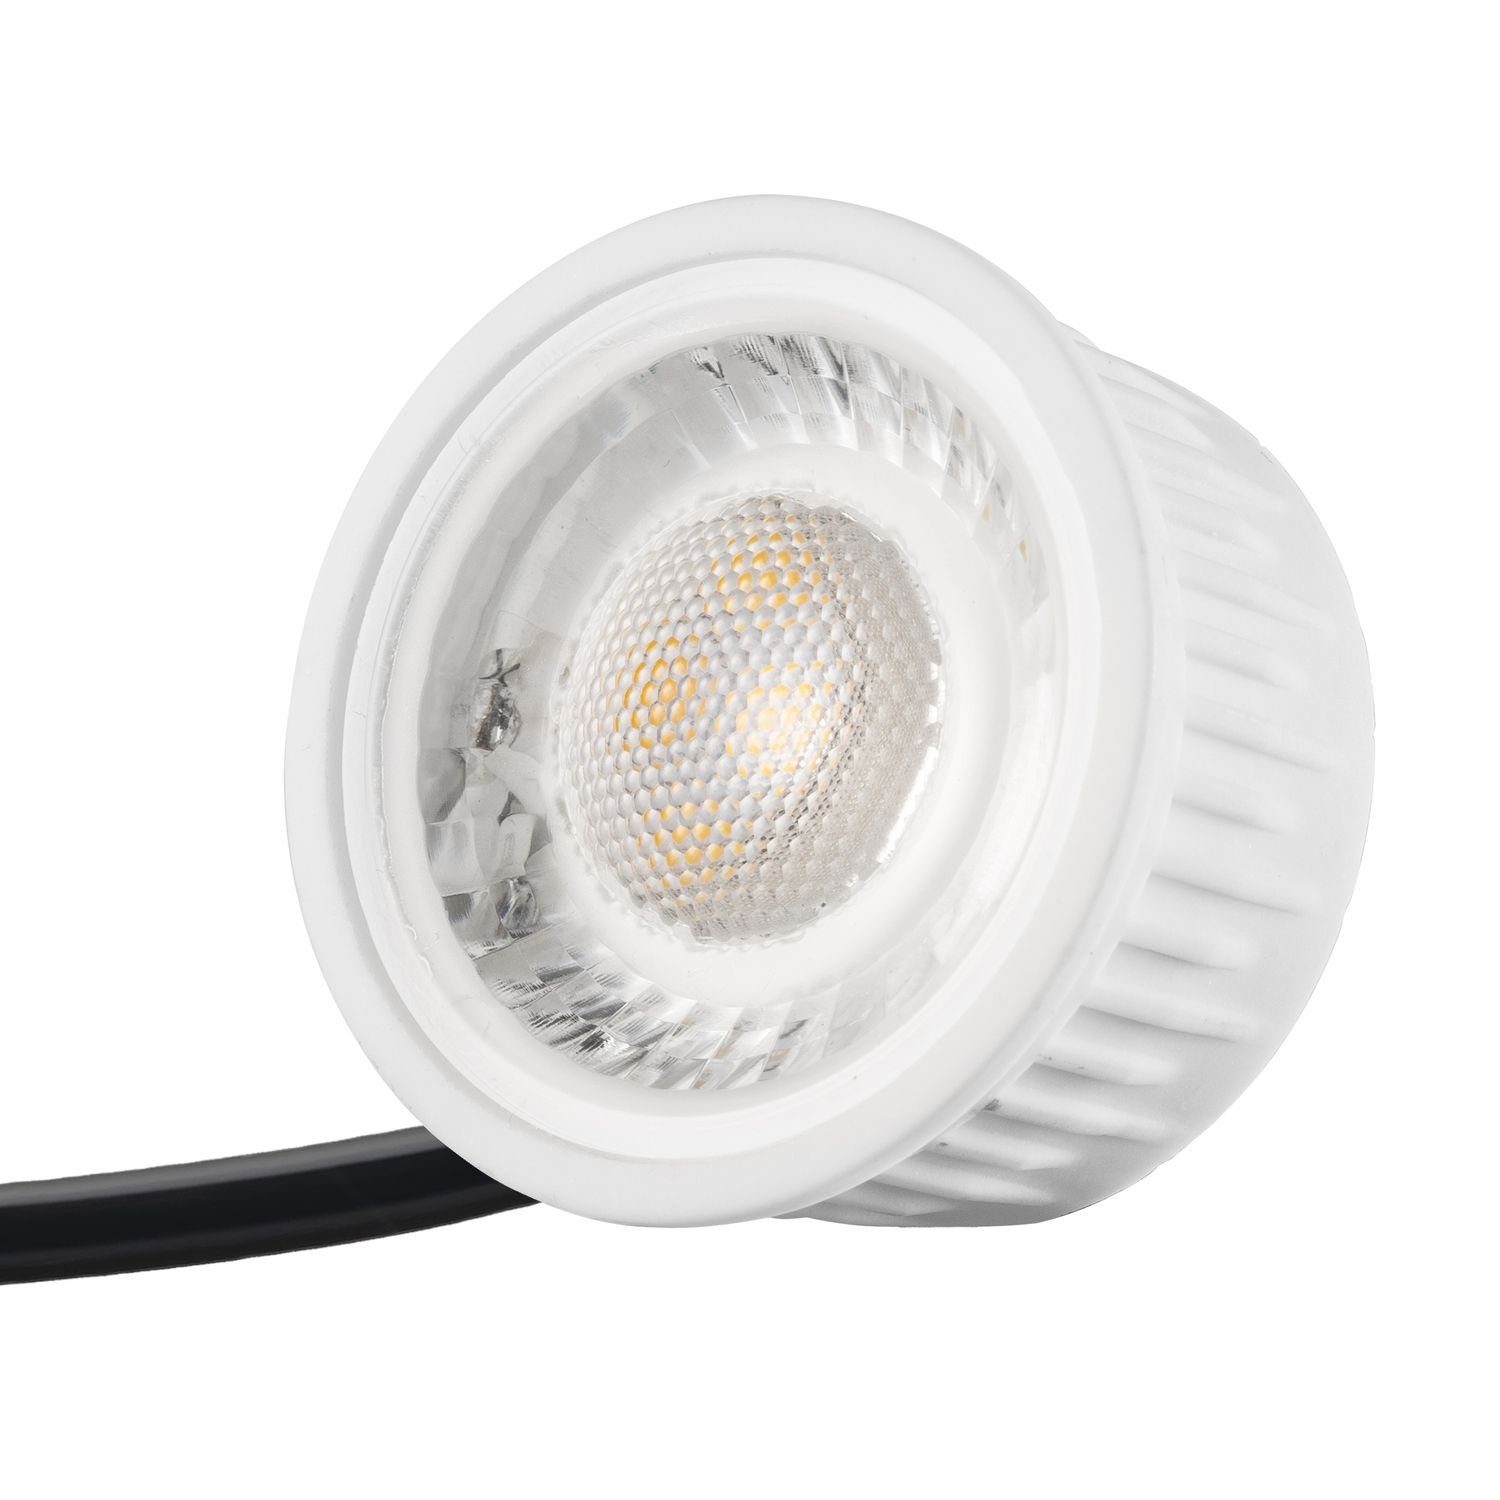 LEDANDO LED Einbaustrahler Einbaustrahler 3er Leuchtmitt LED flach Set chrom in 5W extra IP65 mit